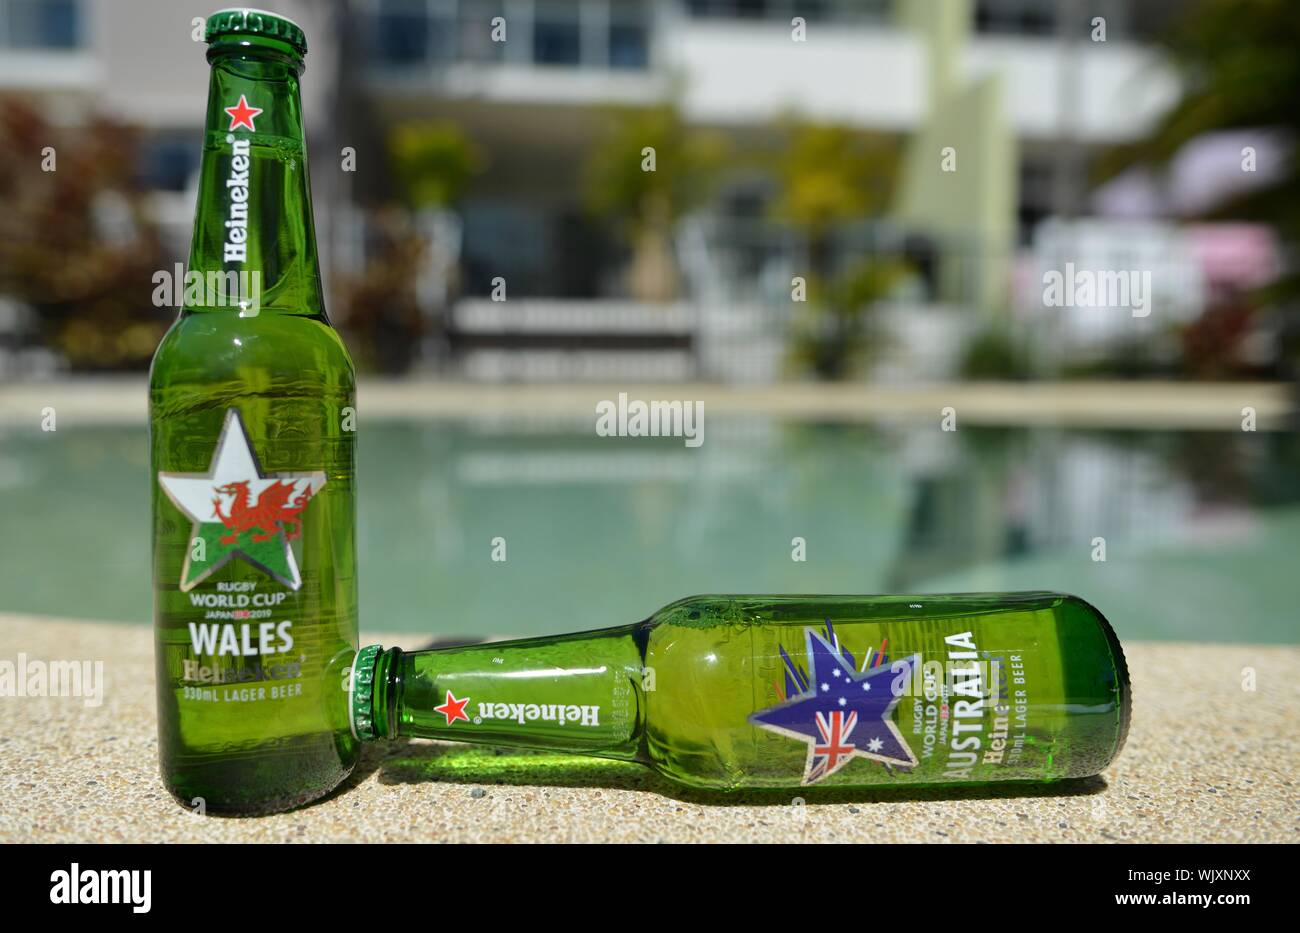 Australia versus Wales, Australia Wins, Heineken 2019 Japan Rugby world cup beer bottles Stock Photo